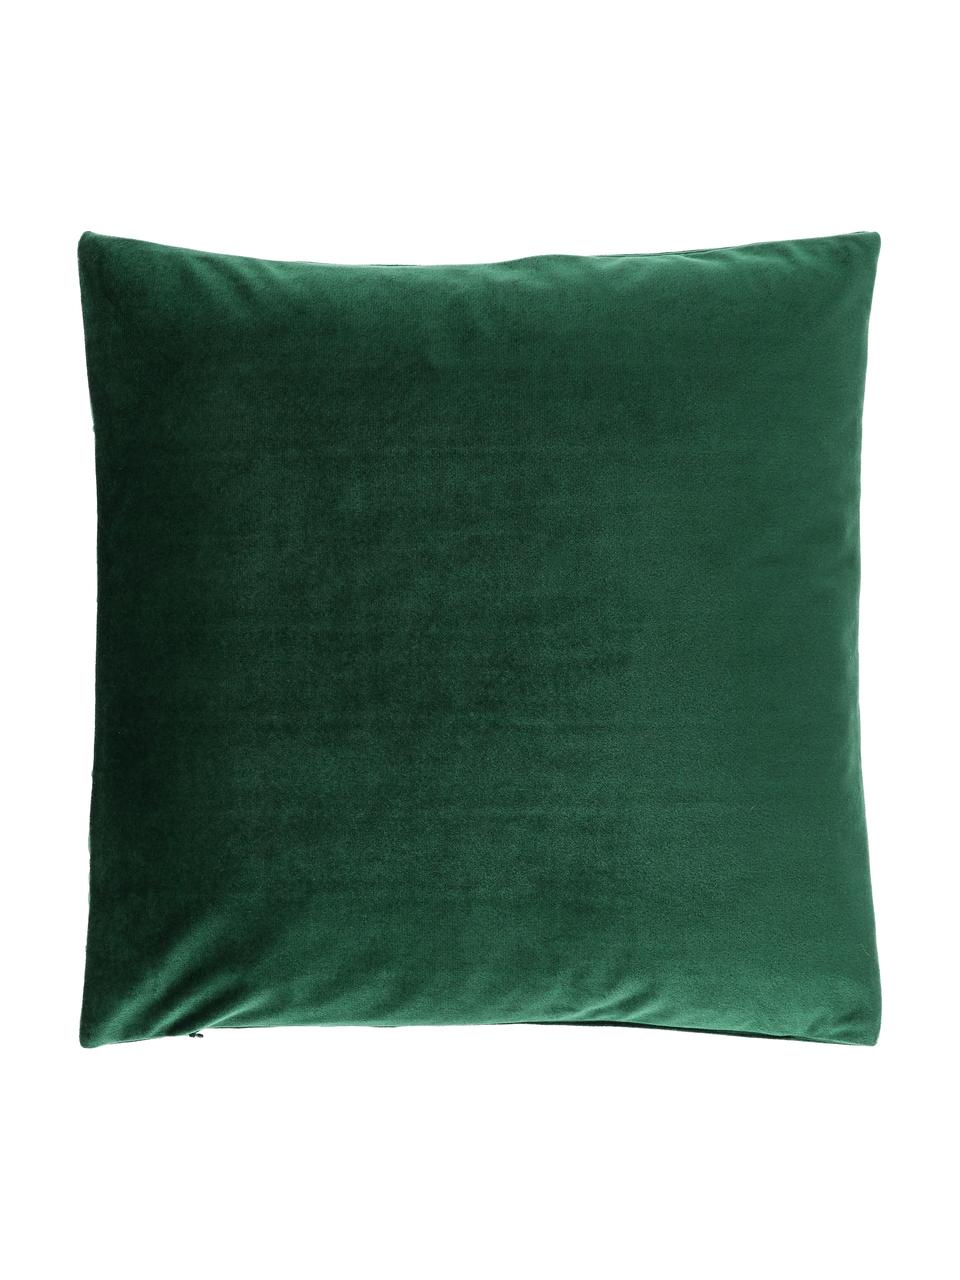 Samt-Kissenhülle Lola in Dunkelgrün mit Struktumuster, Samt (100% Polyester), Grün, 40 x 40 cm